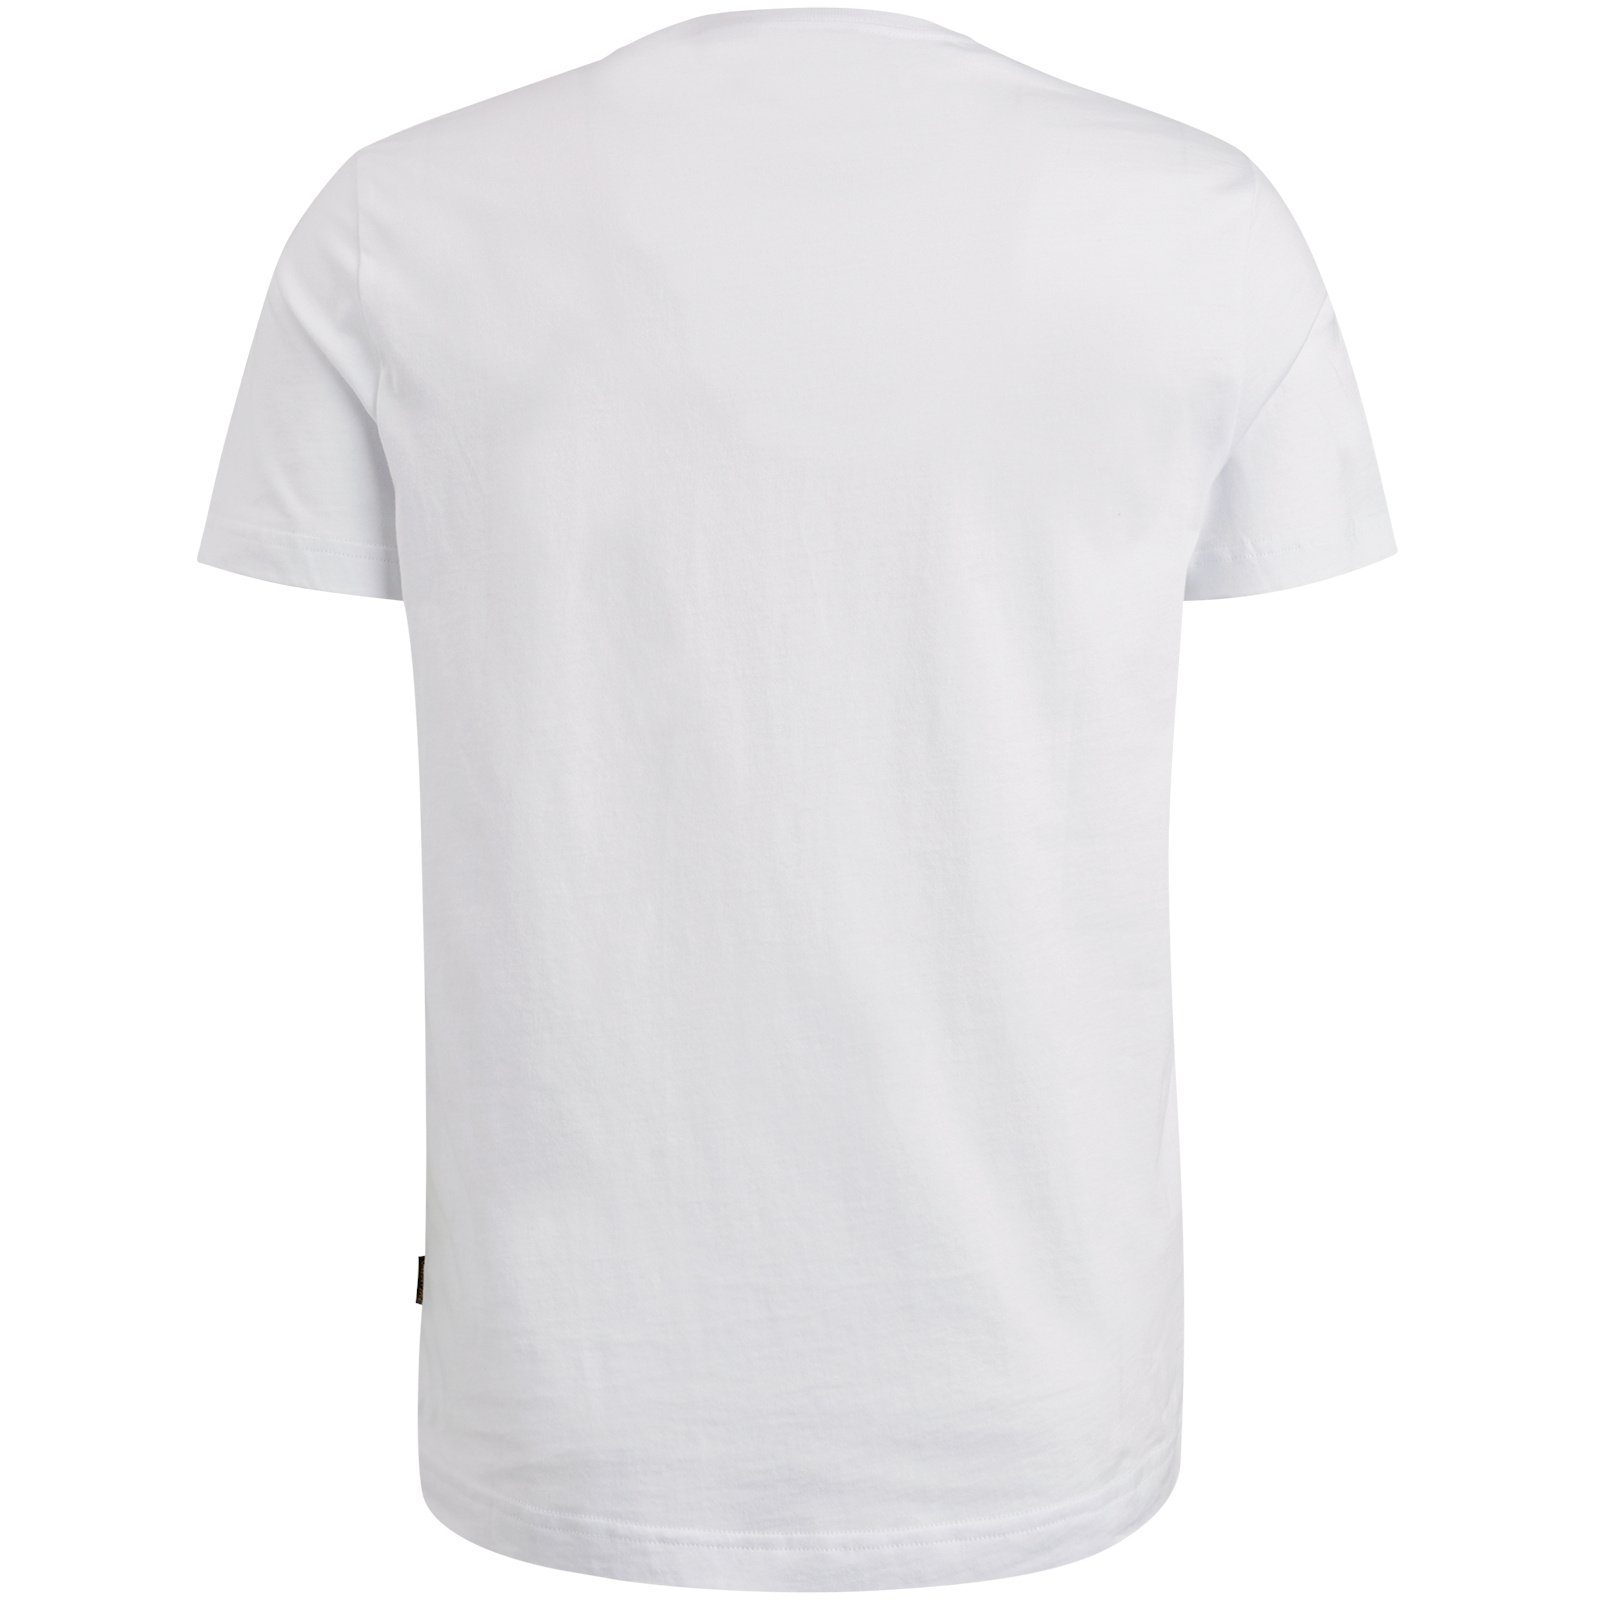 r-neck digital T-Shirt sleeve single Short PME jersey LEGEND print